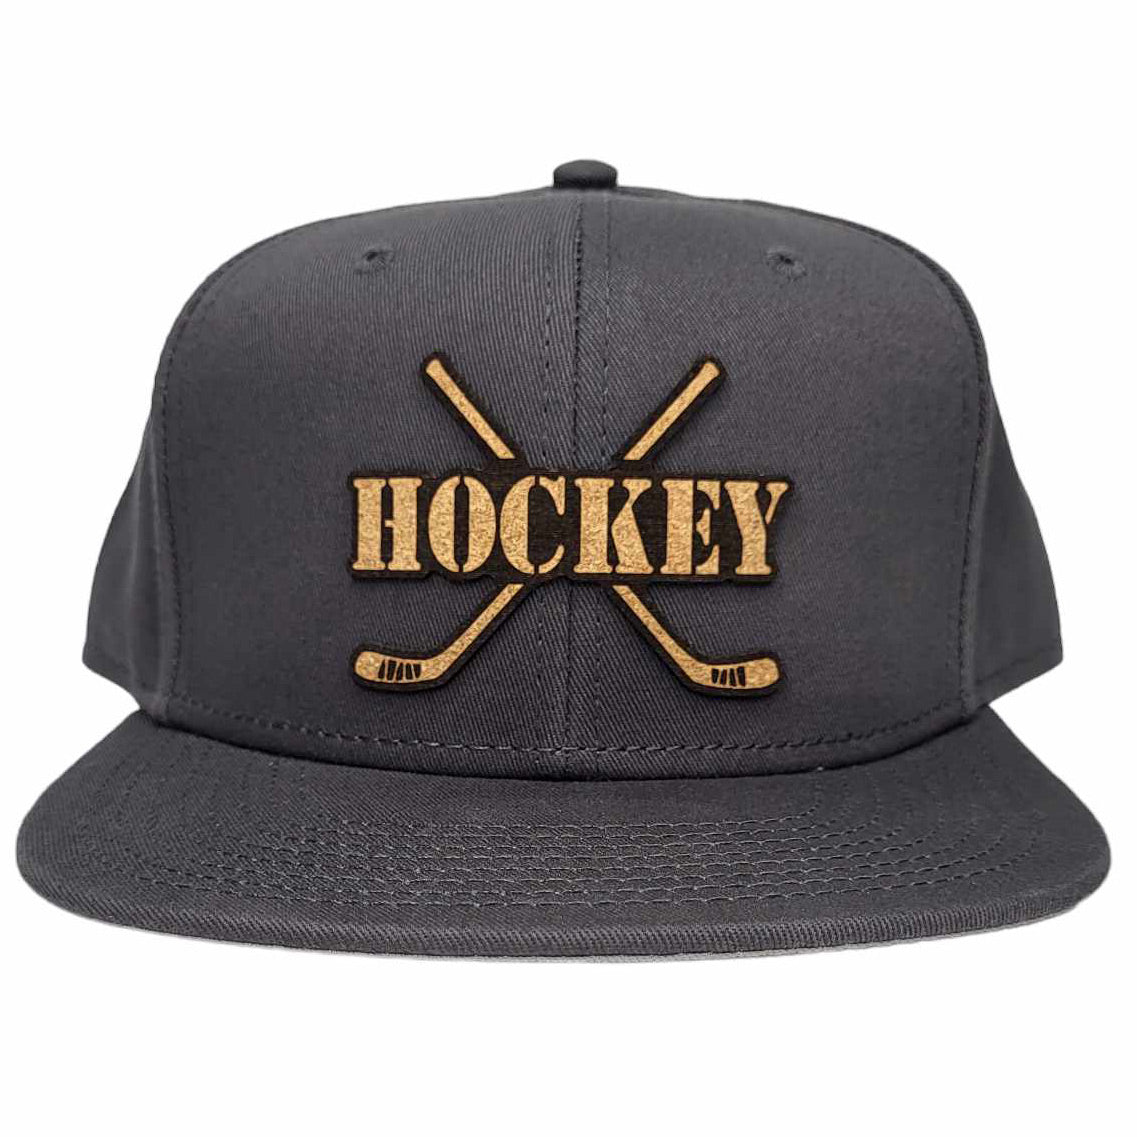 Hockey Classic Hat